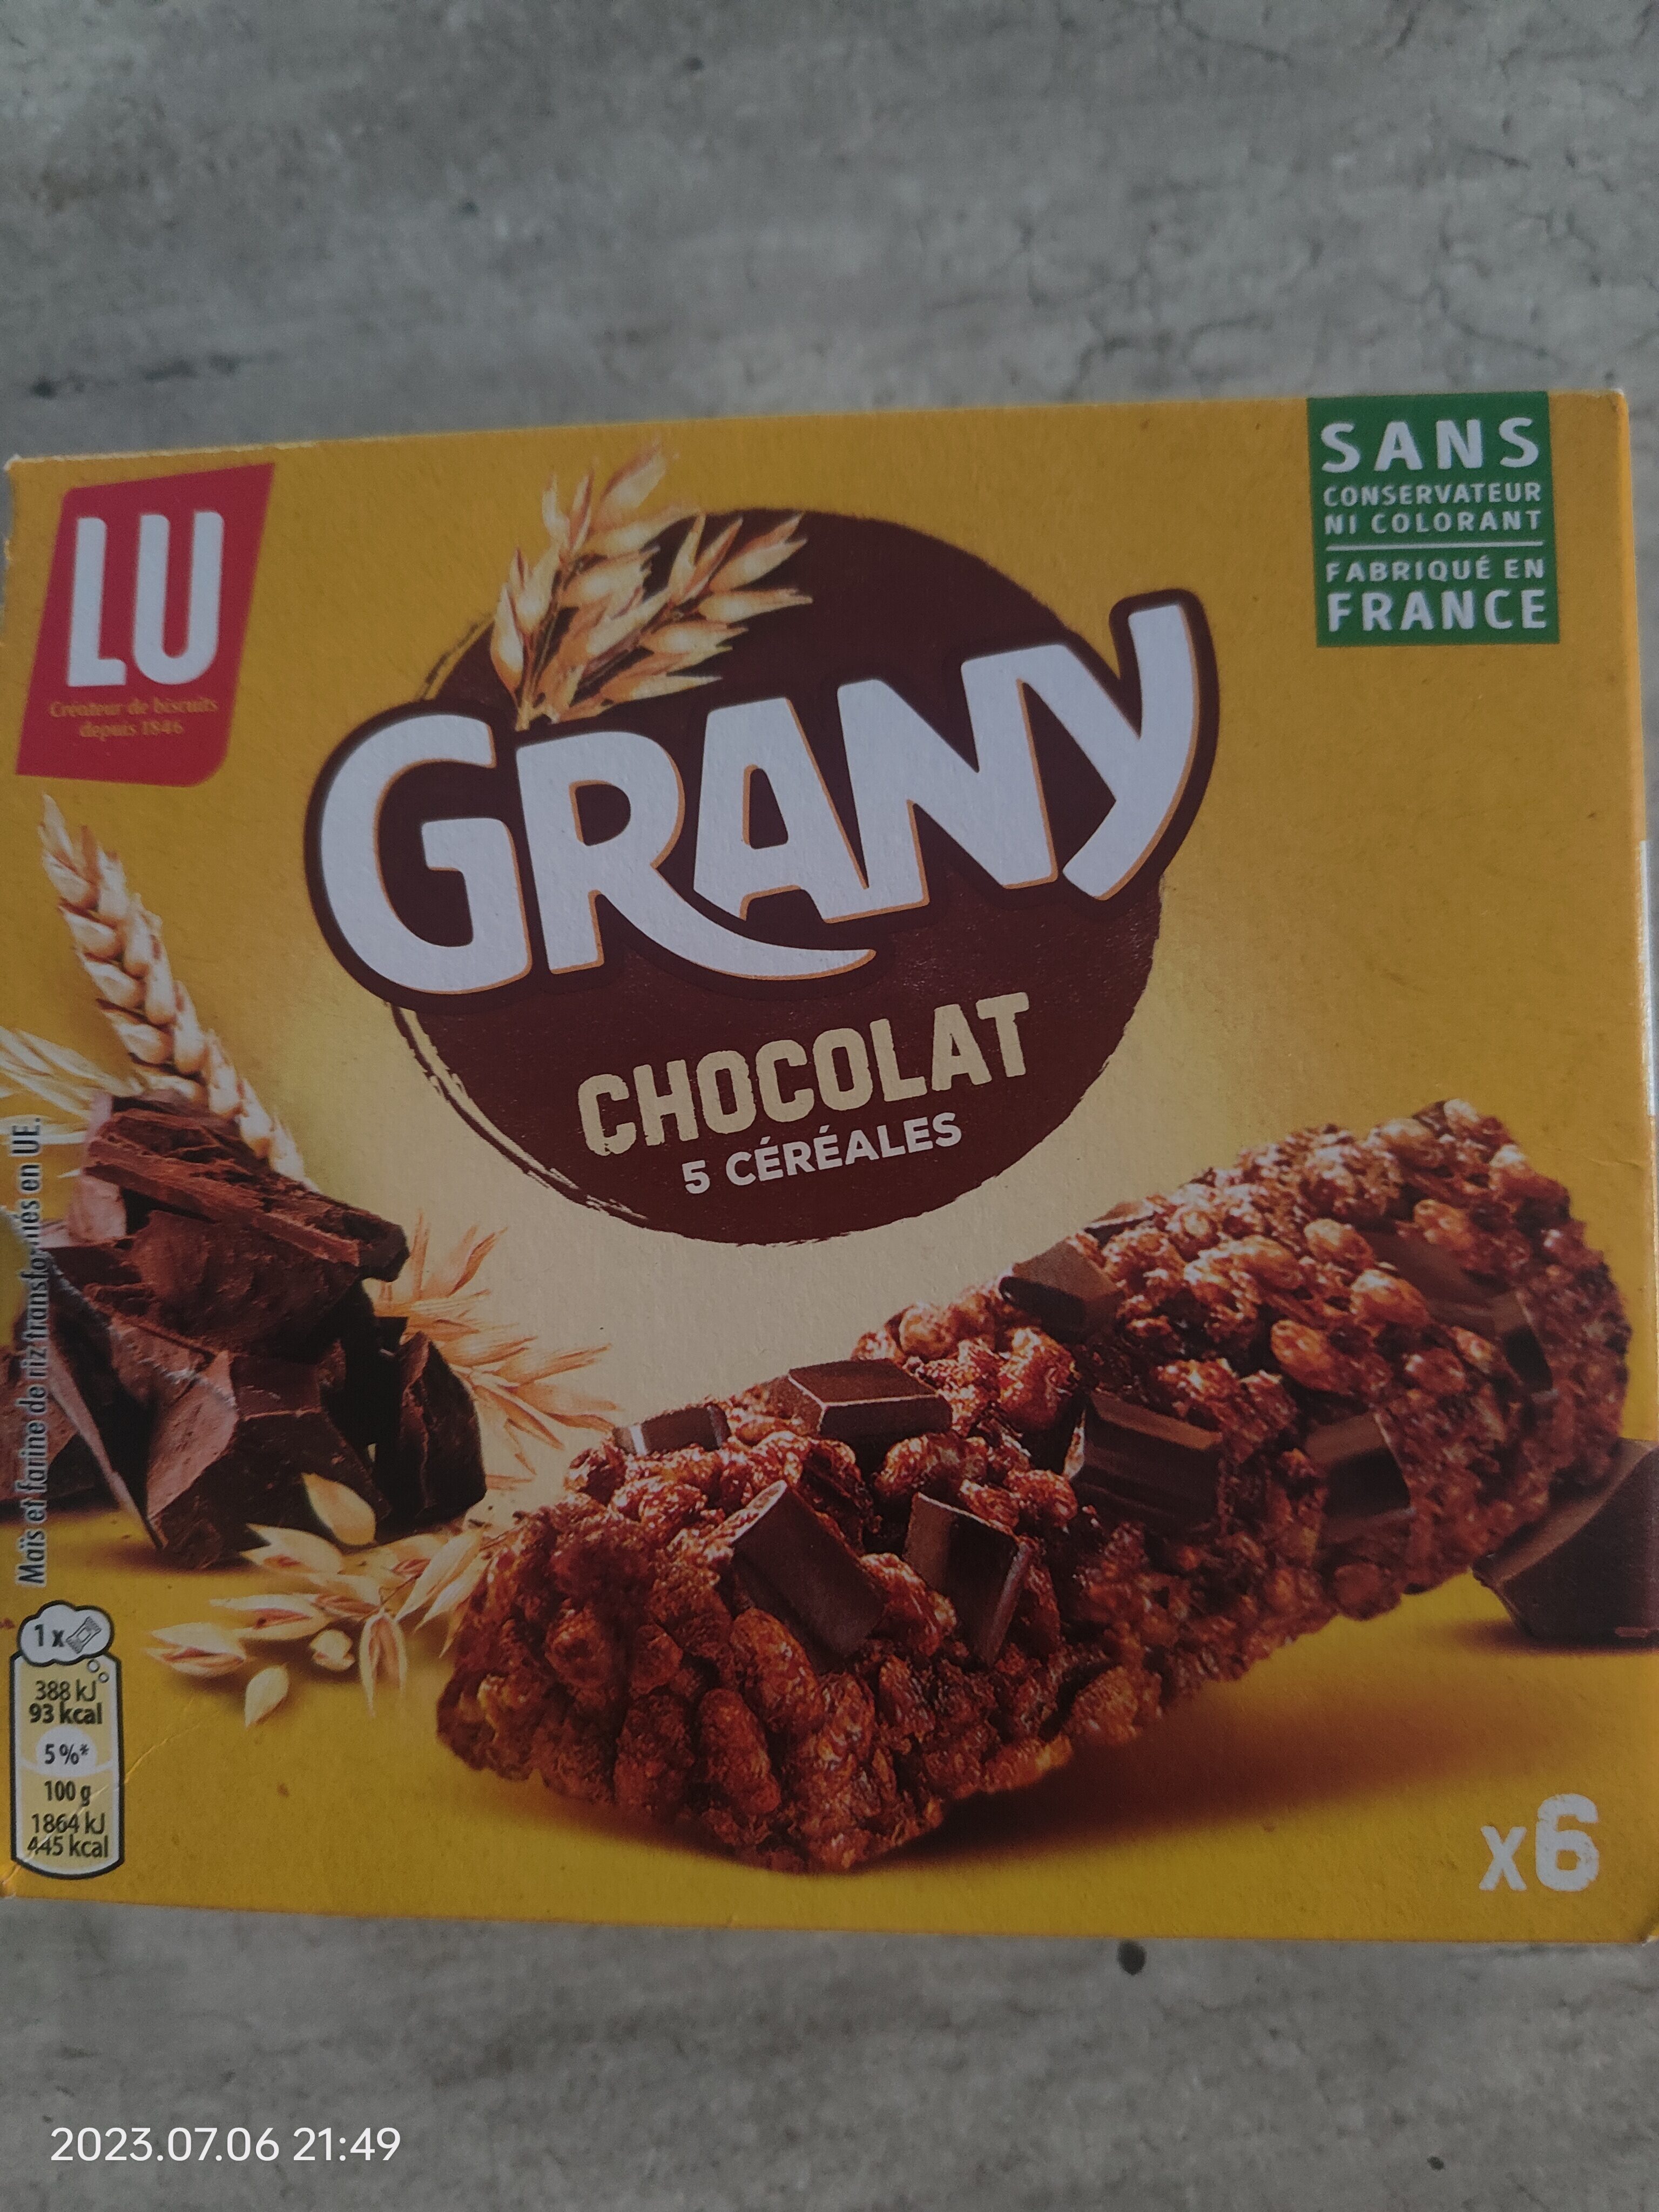 LU - Grany Chocolate 5 Cereals Bar x6, 125g (4.5oz) - Produit